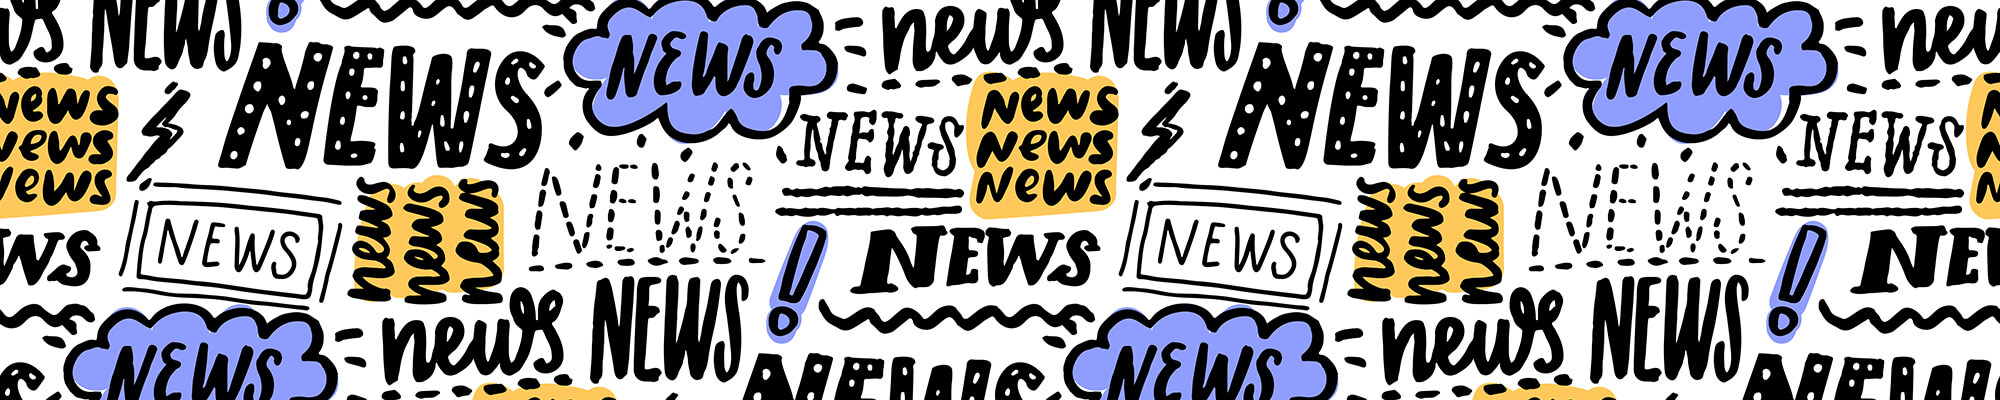 news written in cartoon fonts